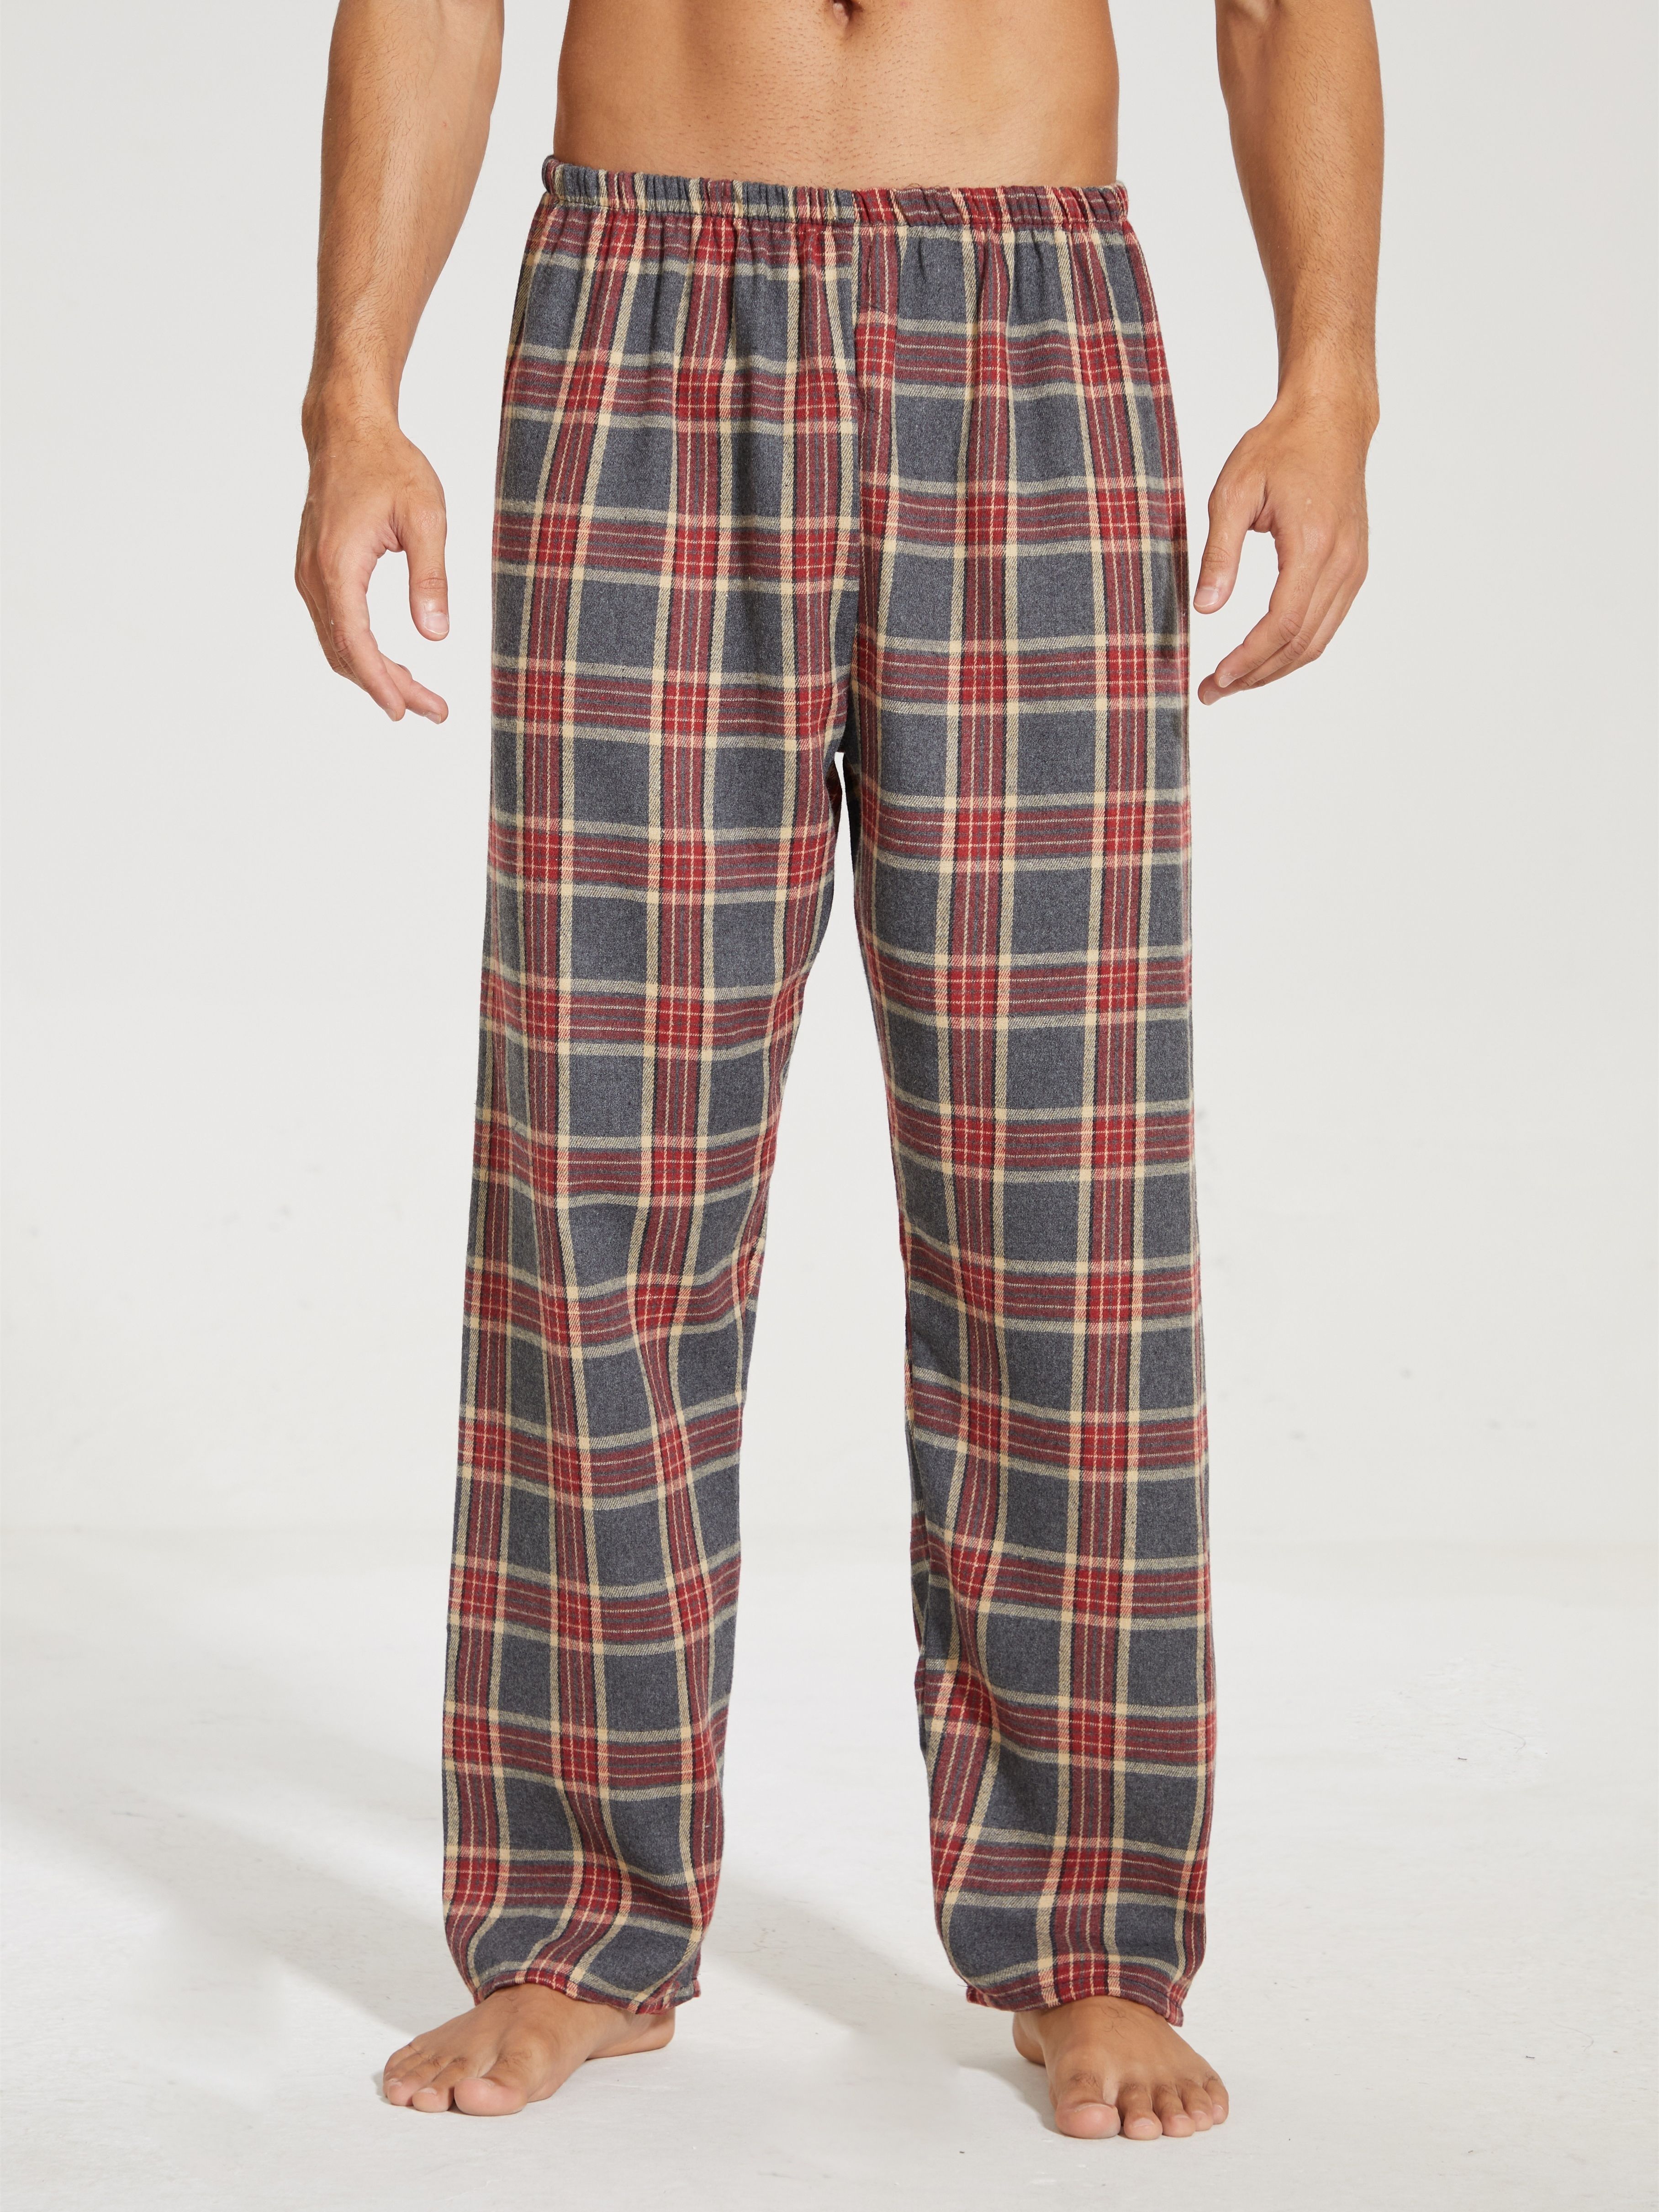 Peek-a-Boo Pattern Shop Hit the Hay Pajama Pants